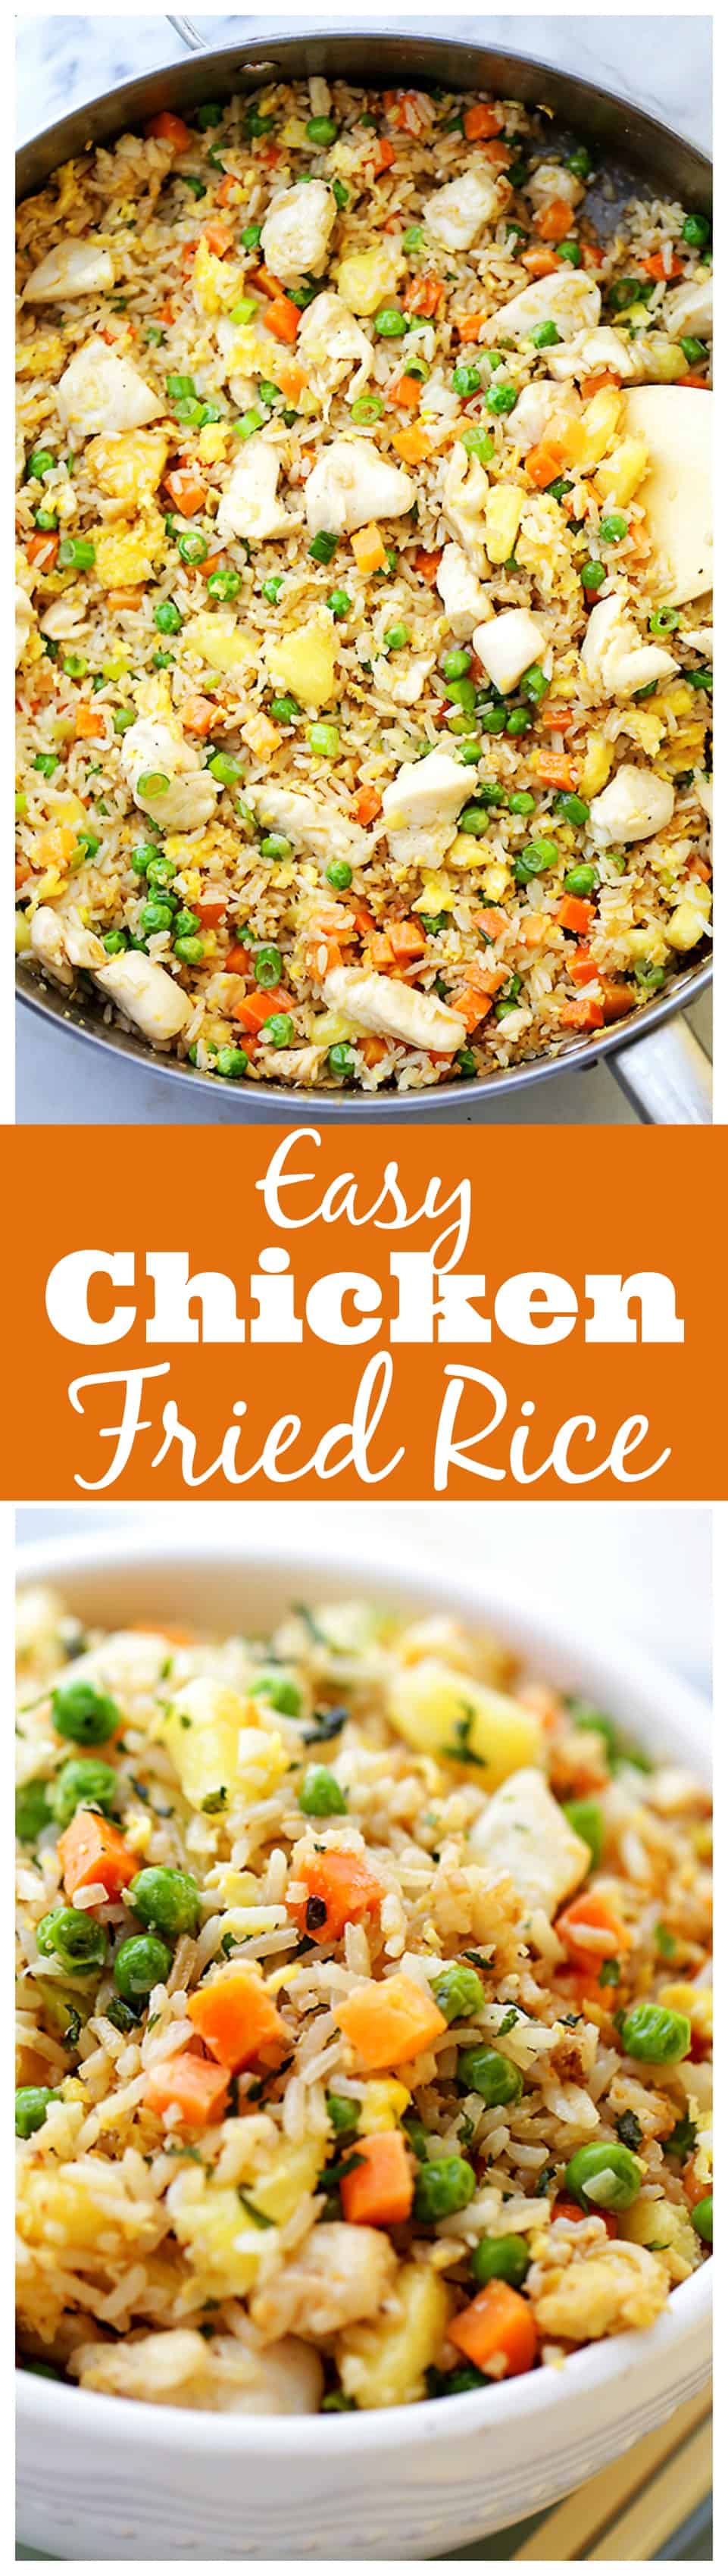 Easy Chicken Fried Rice Recipe | Diethood